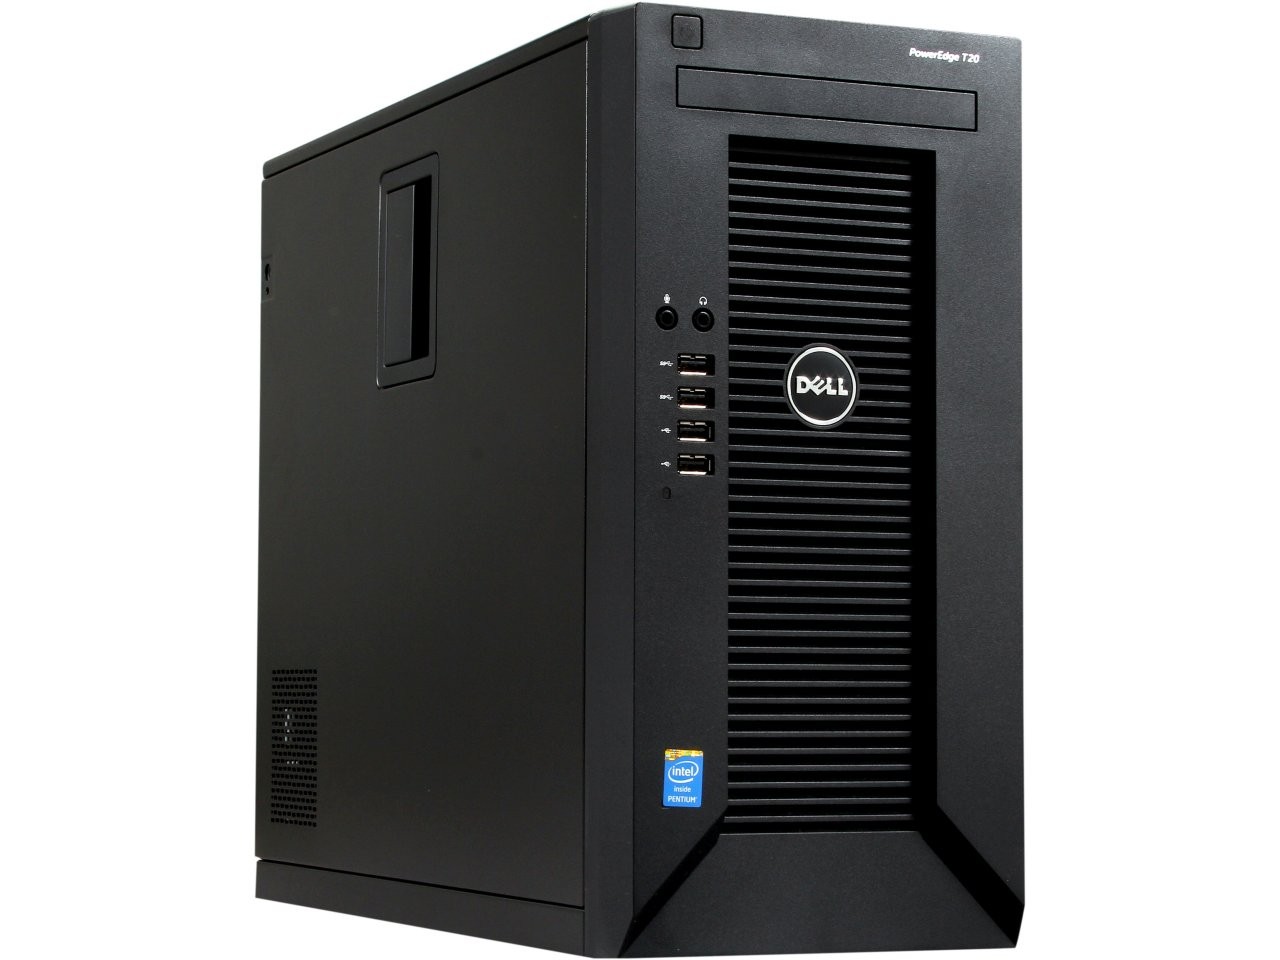 Сервер Dell PowerEdge T20 Tower/ E3-1225v3 4C 3.2GHz(8Mb)/1x4GbU2D(1600)/ On-board C226 SATA(2x3Gb/s+2x6Gb/s) RAID0/1/ 1x1Tb SATA 7.2k LFF/ UpTo4LFF N